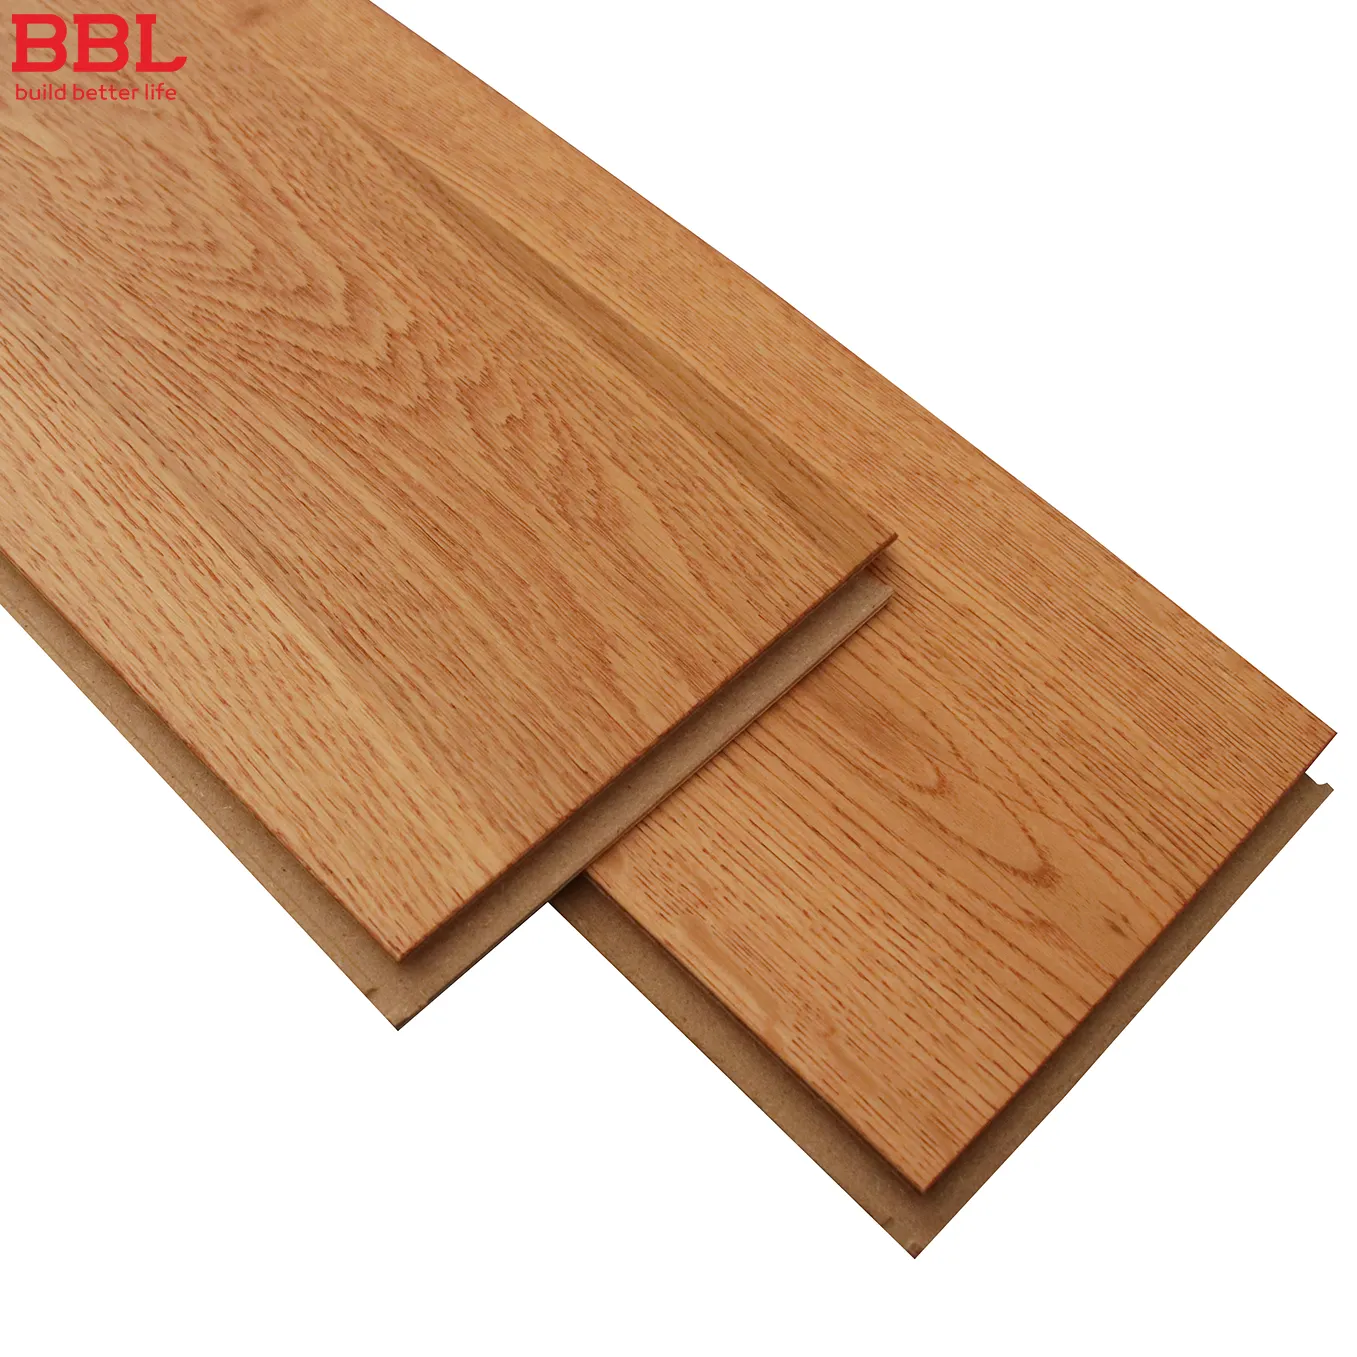 Деревянный шпон BBL, hdf core, Европейский белый дуб, 127 мм, 12/1, 2 мм, многослойный деревянный пол